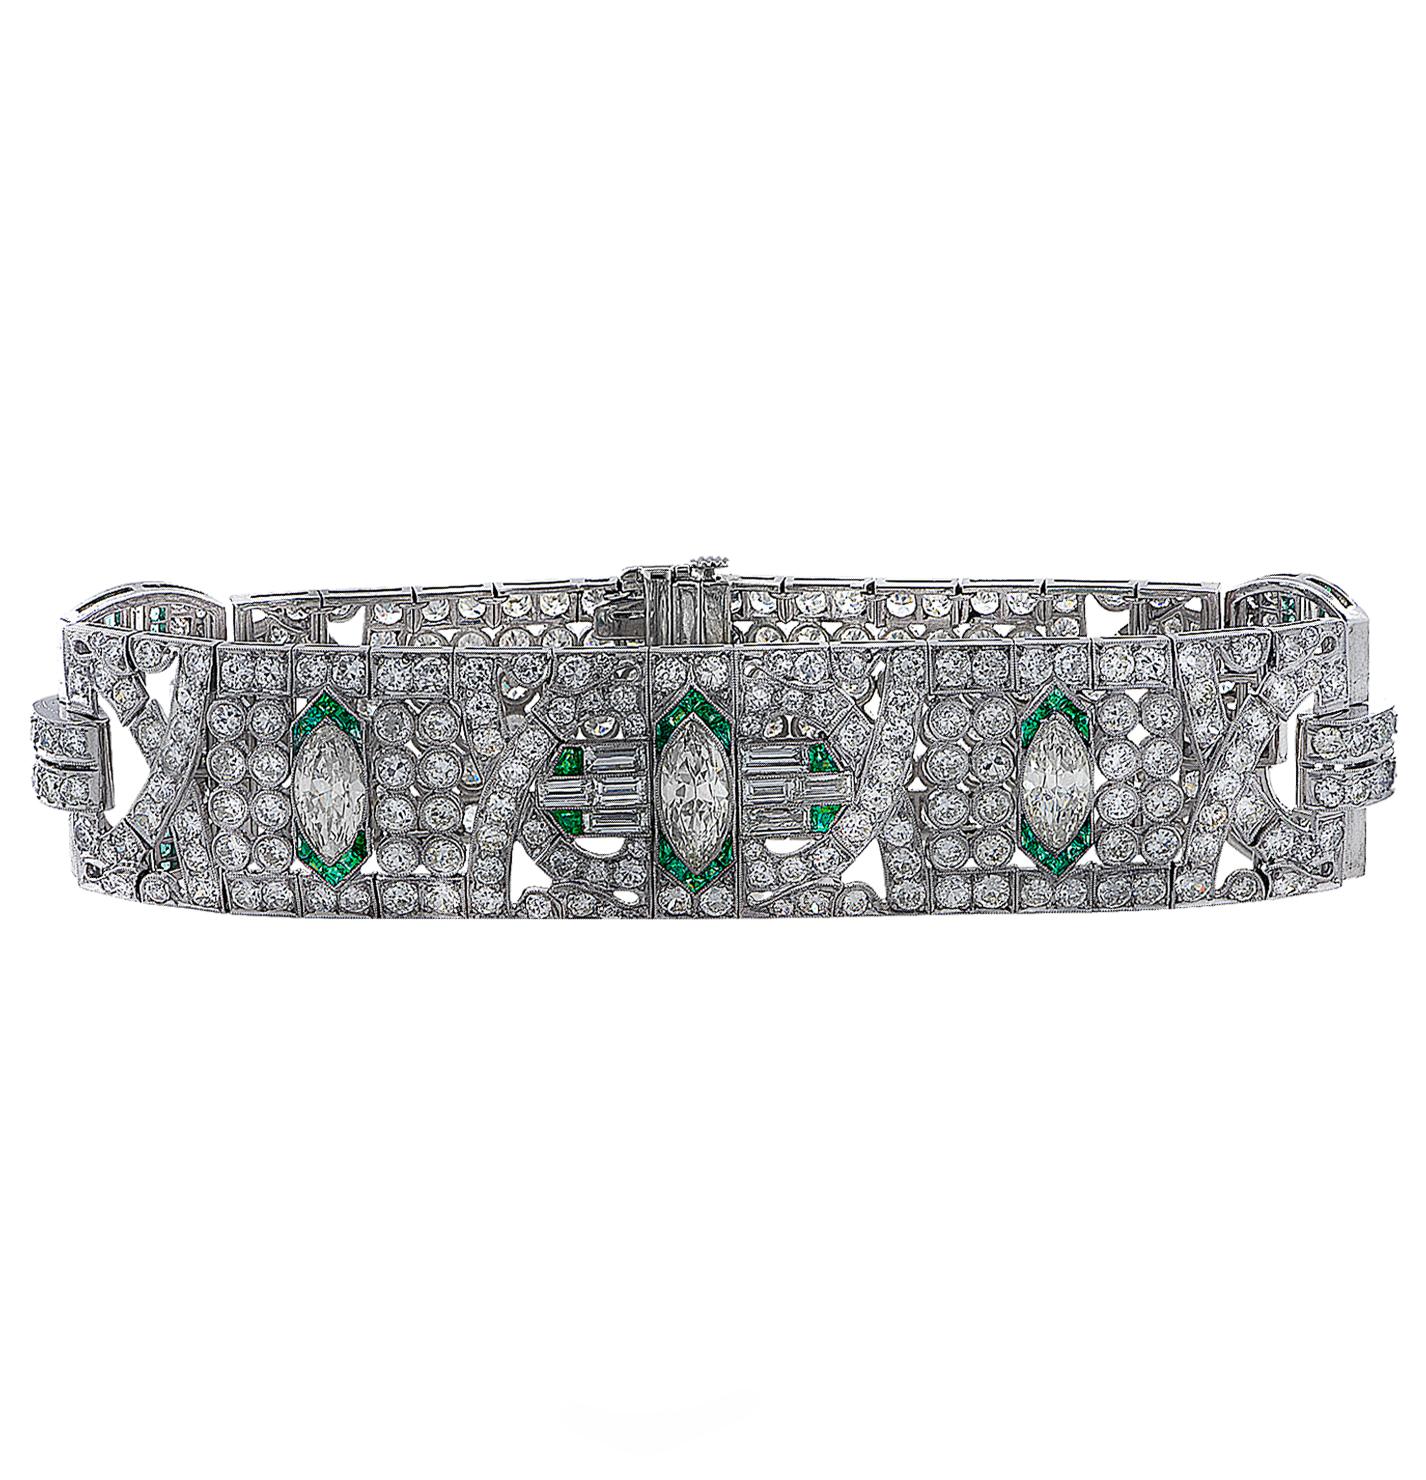 Women's Art Deco 21 Carat Diamond and Emerald Bracelet